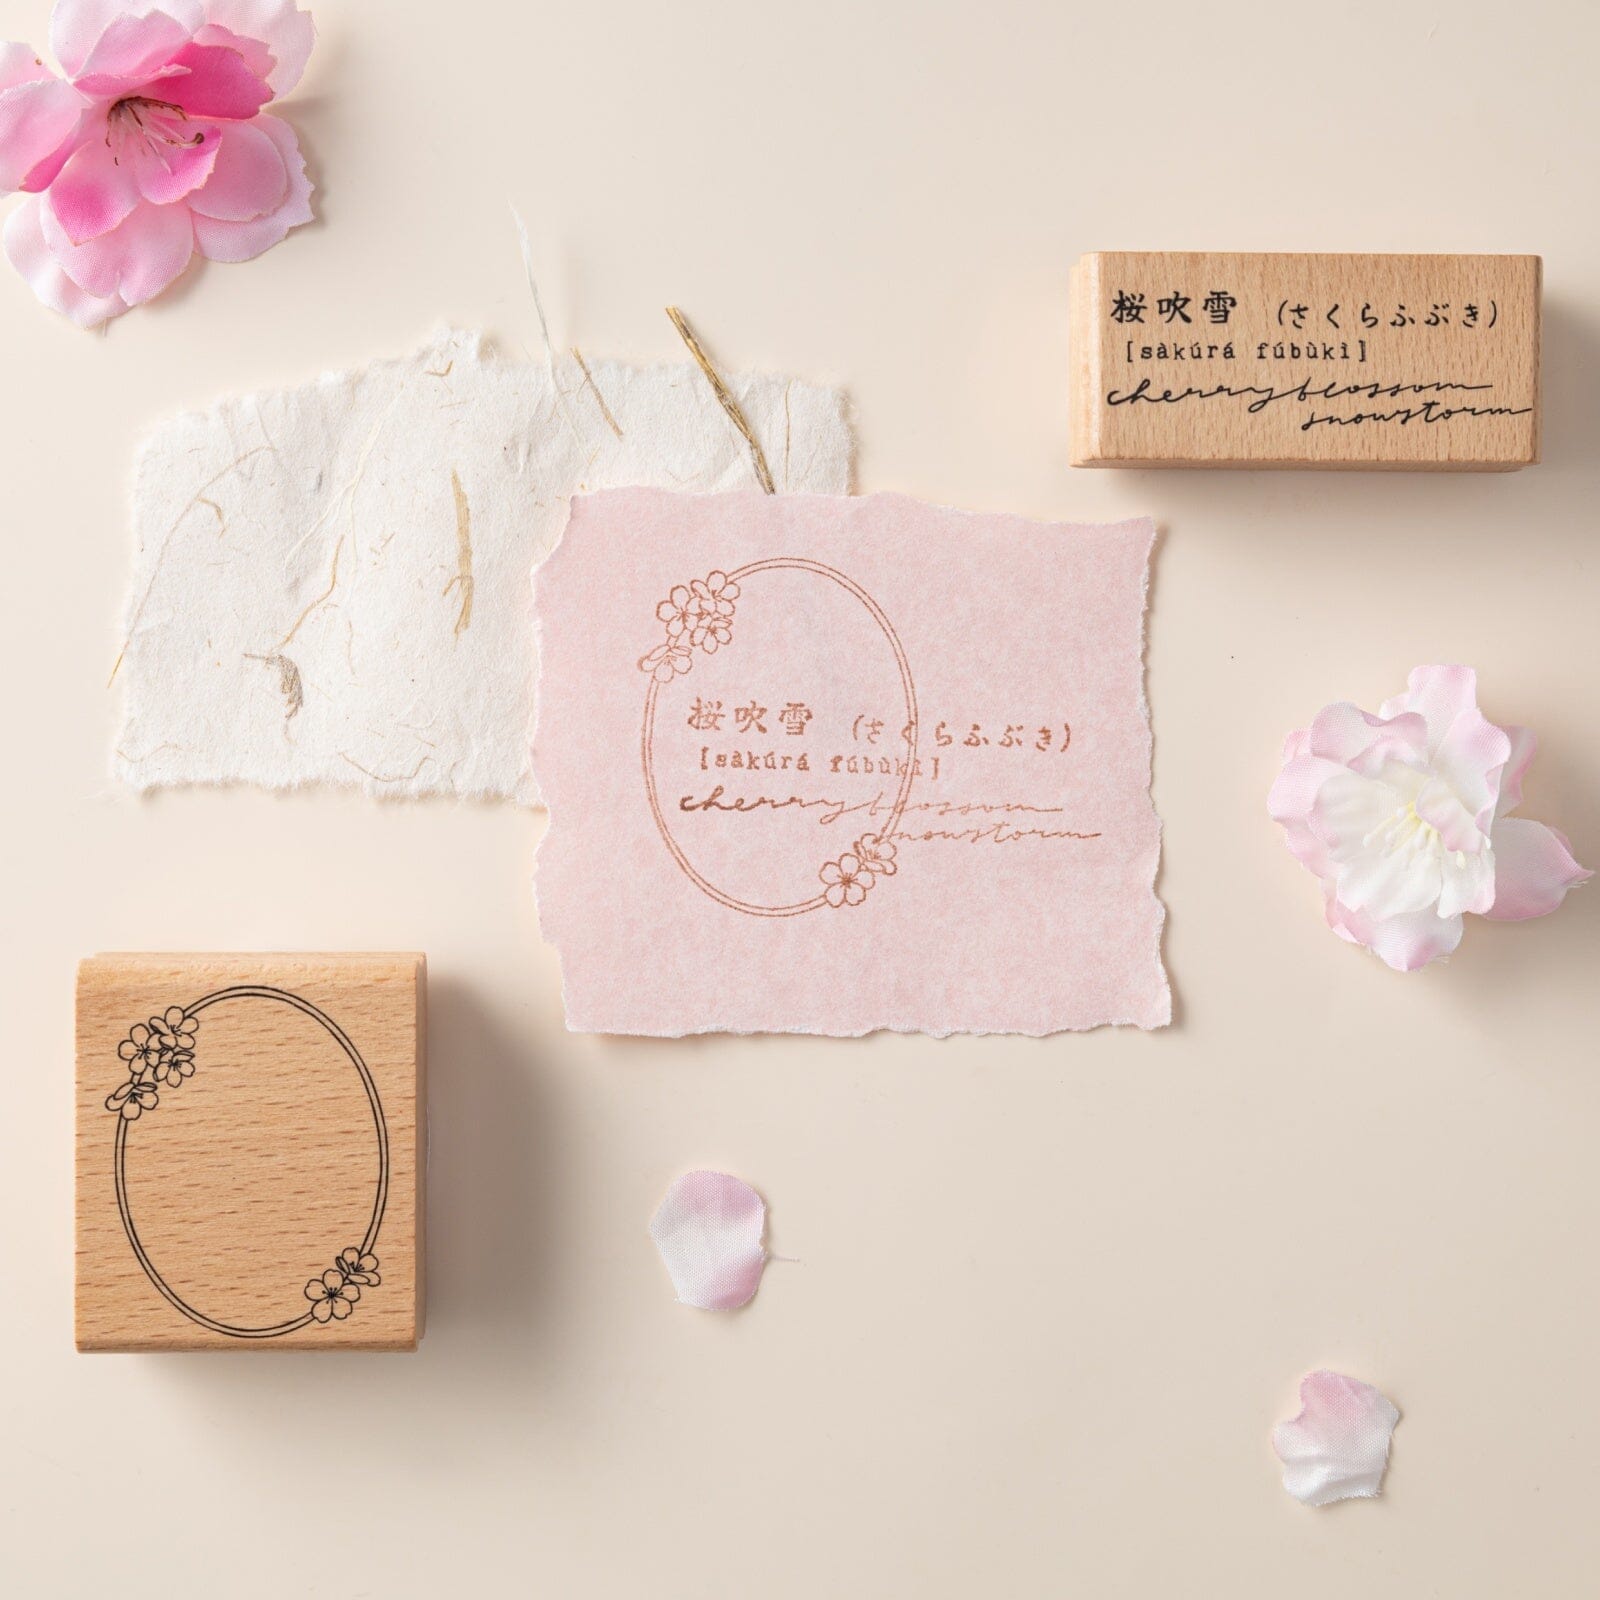 Sakura fubuki stamp with cherry blossom frame stamp on pink paper